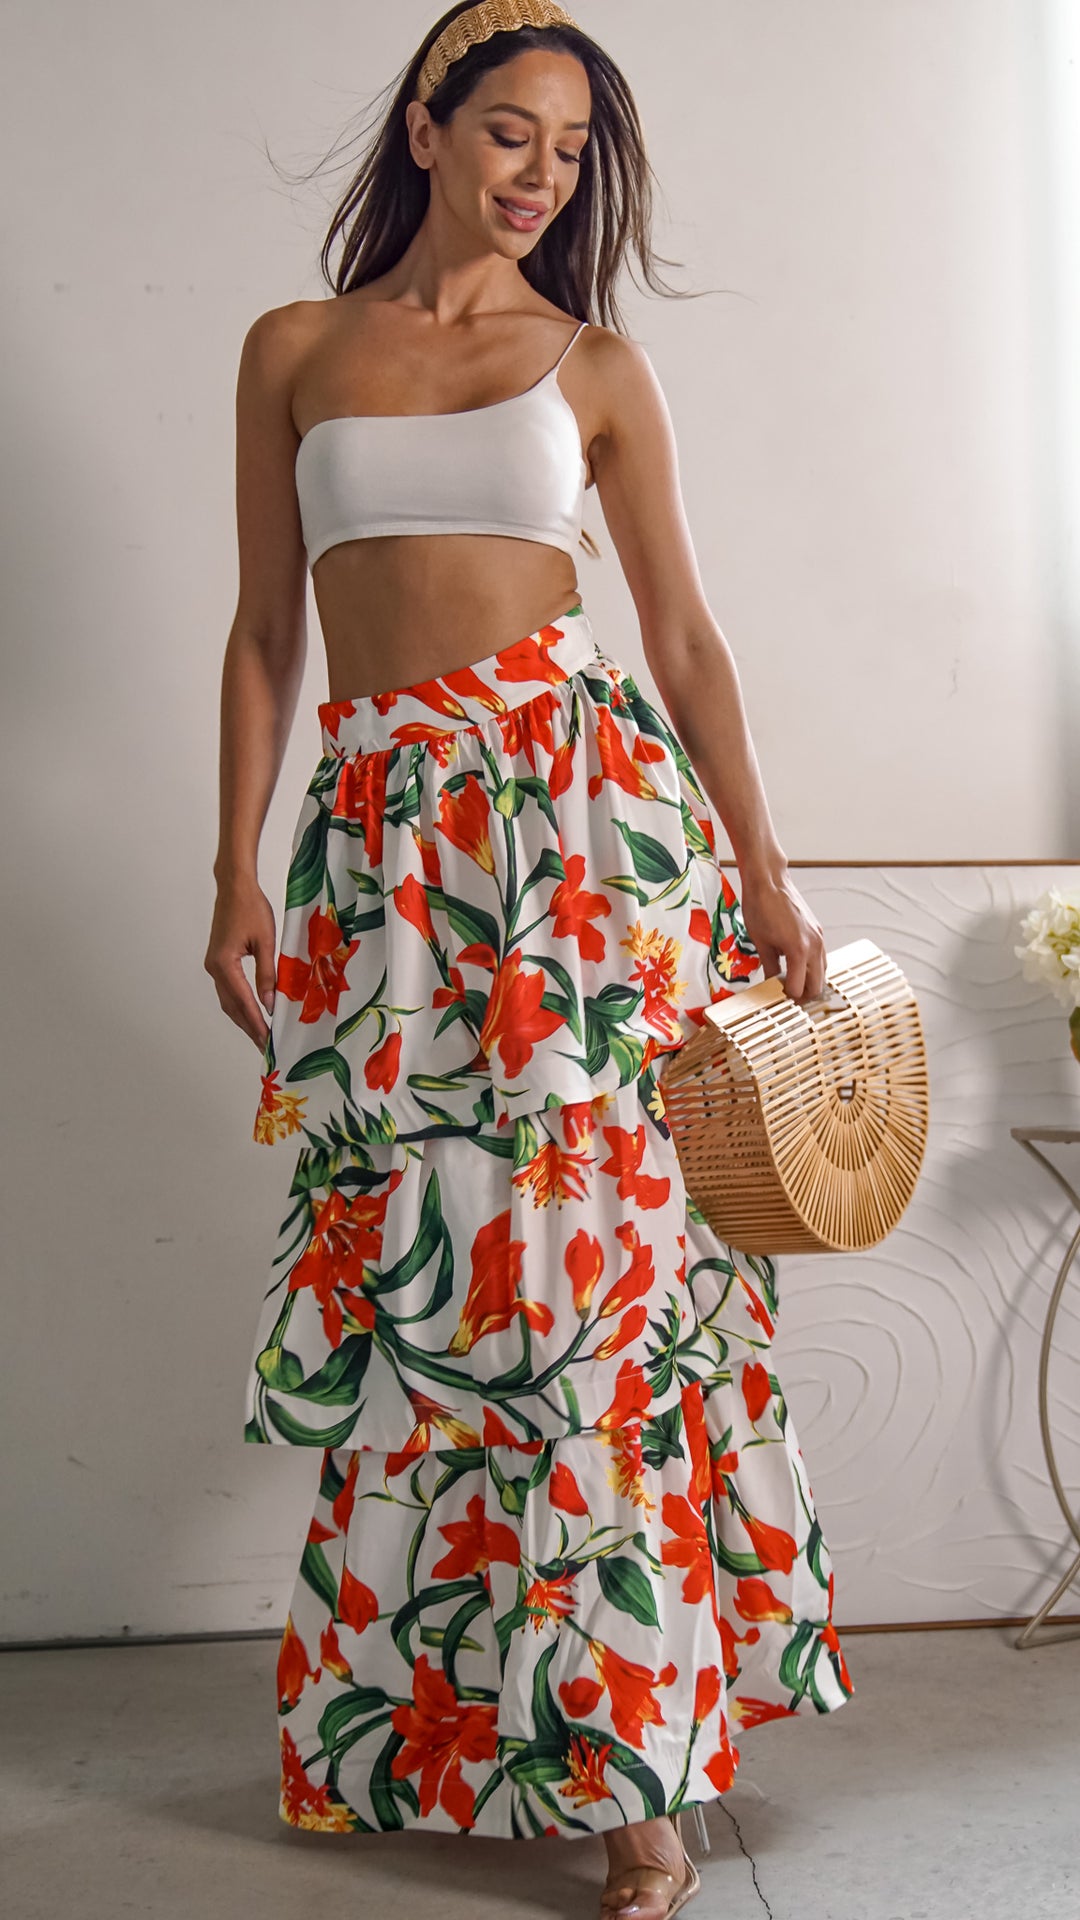 Ophelia Flower Print Skirt - Steps New York